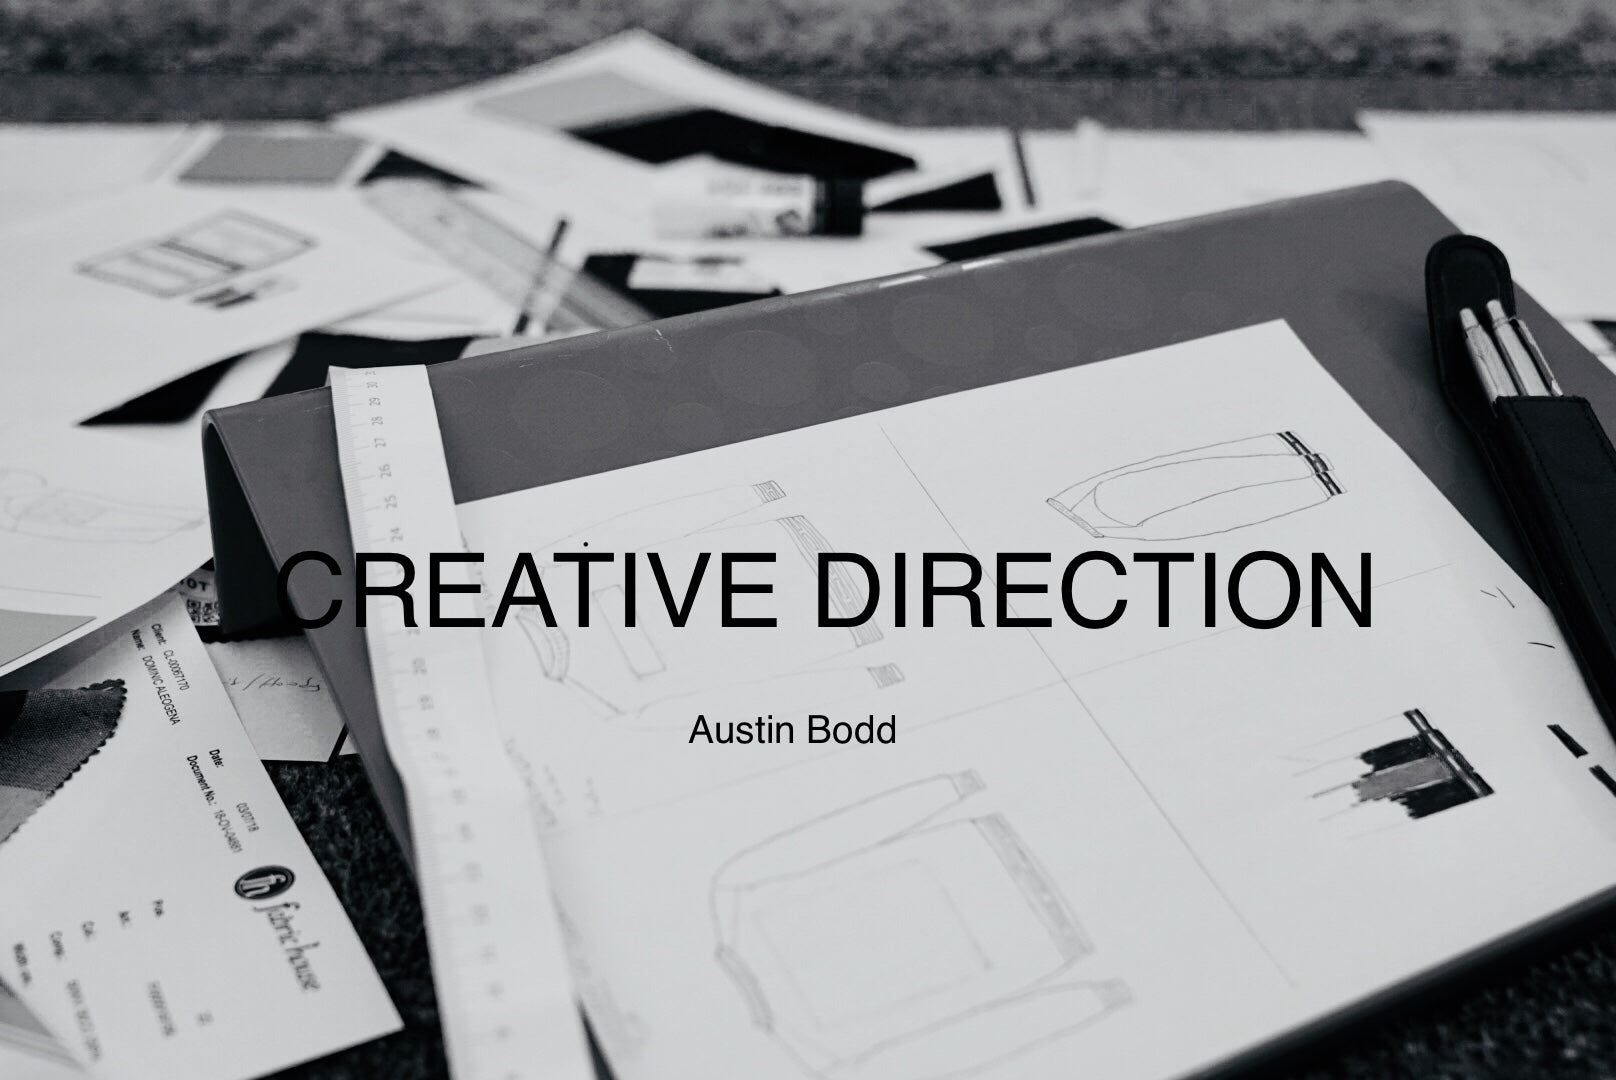 The Austin Bodd creative direction 